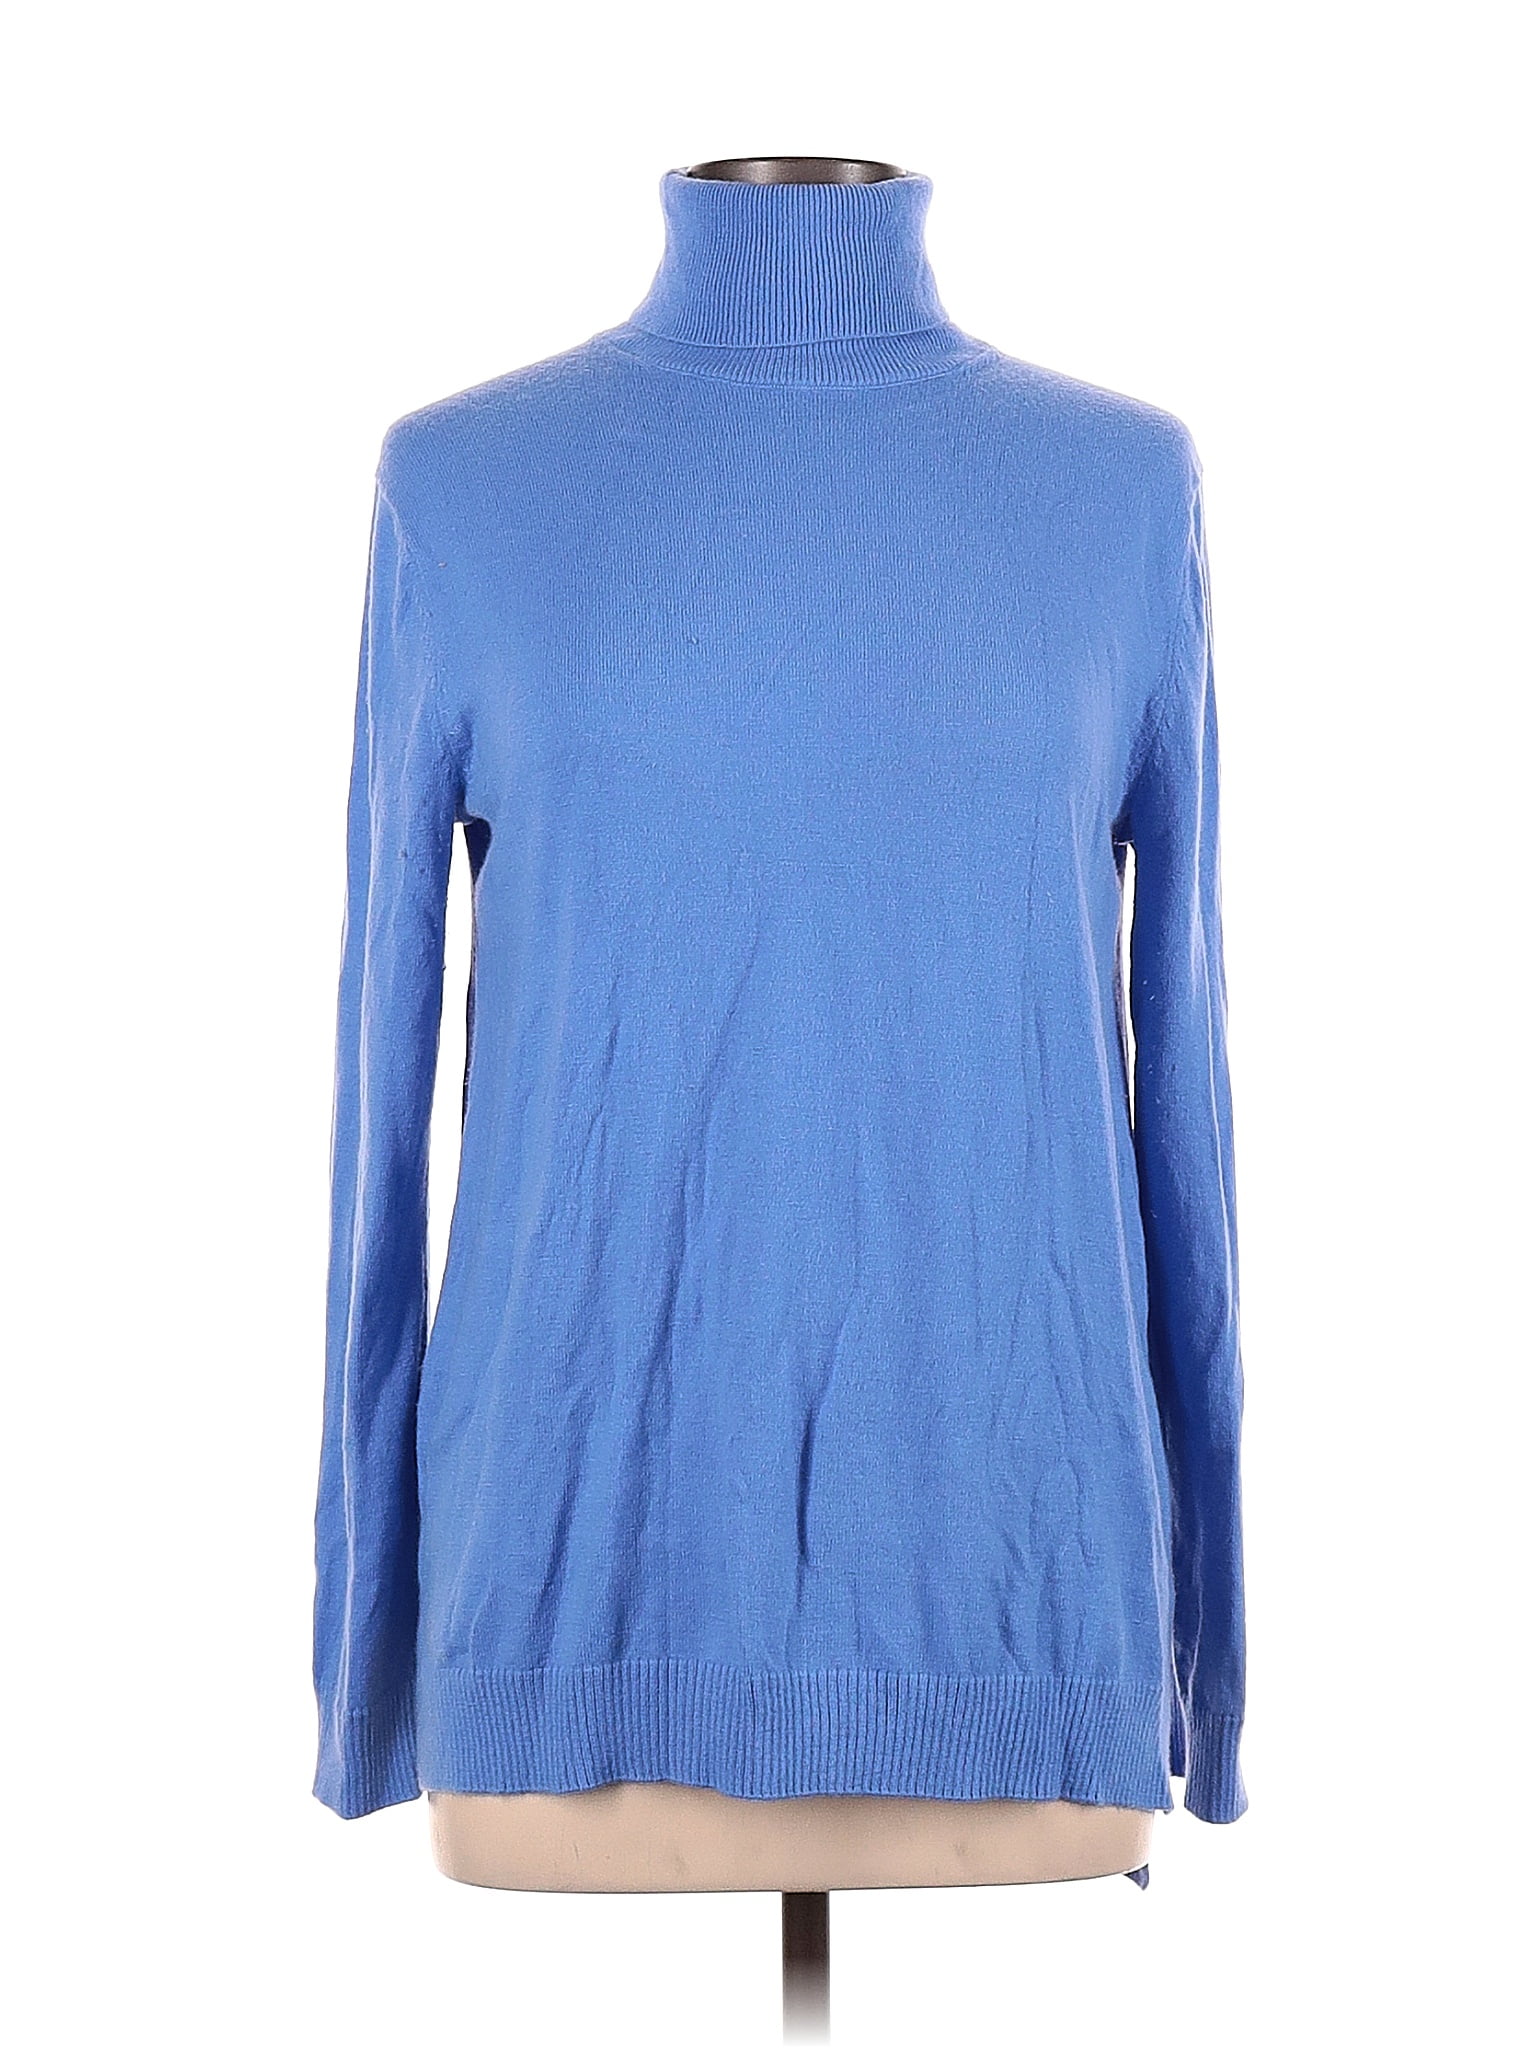 Gap Blue Turtleneck Sweater Size M - 68% off | thredUP